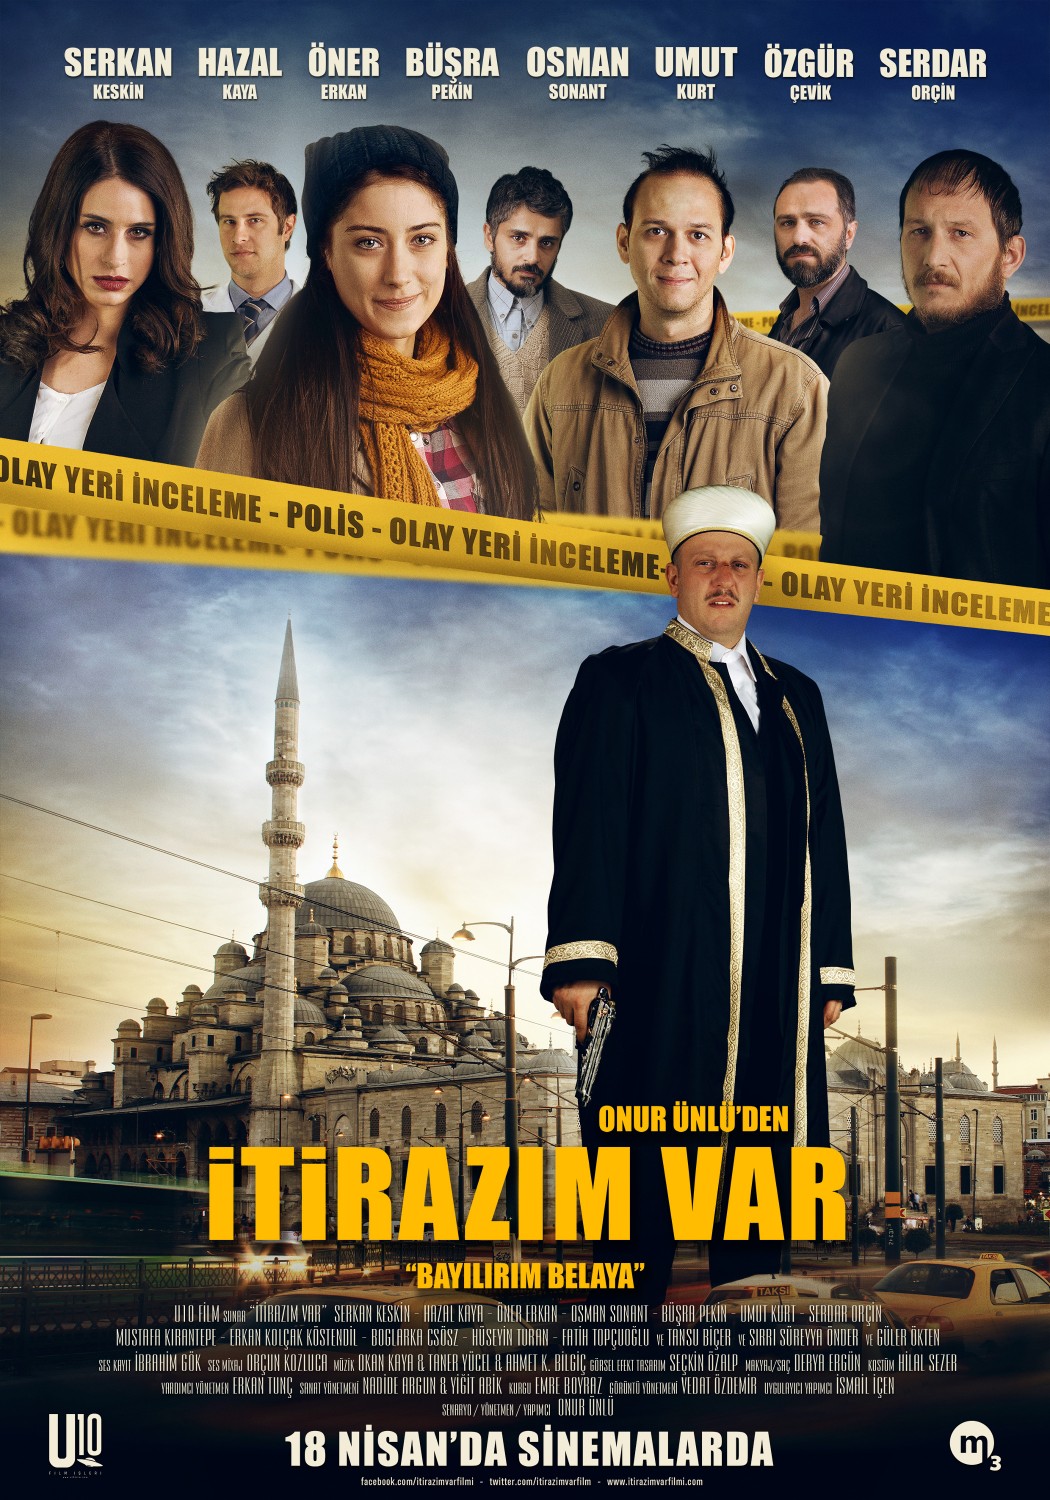 Extra Large Movie Poster Image for Itirazim Var 